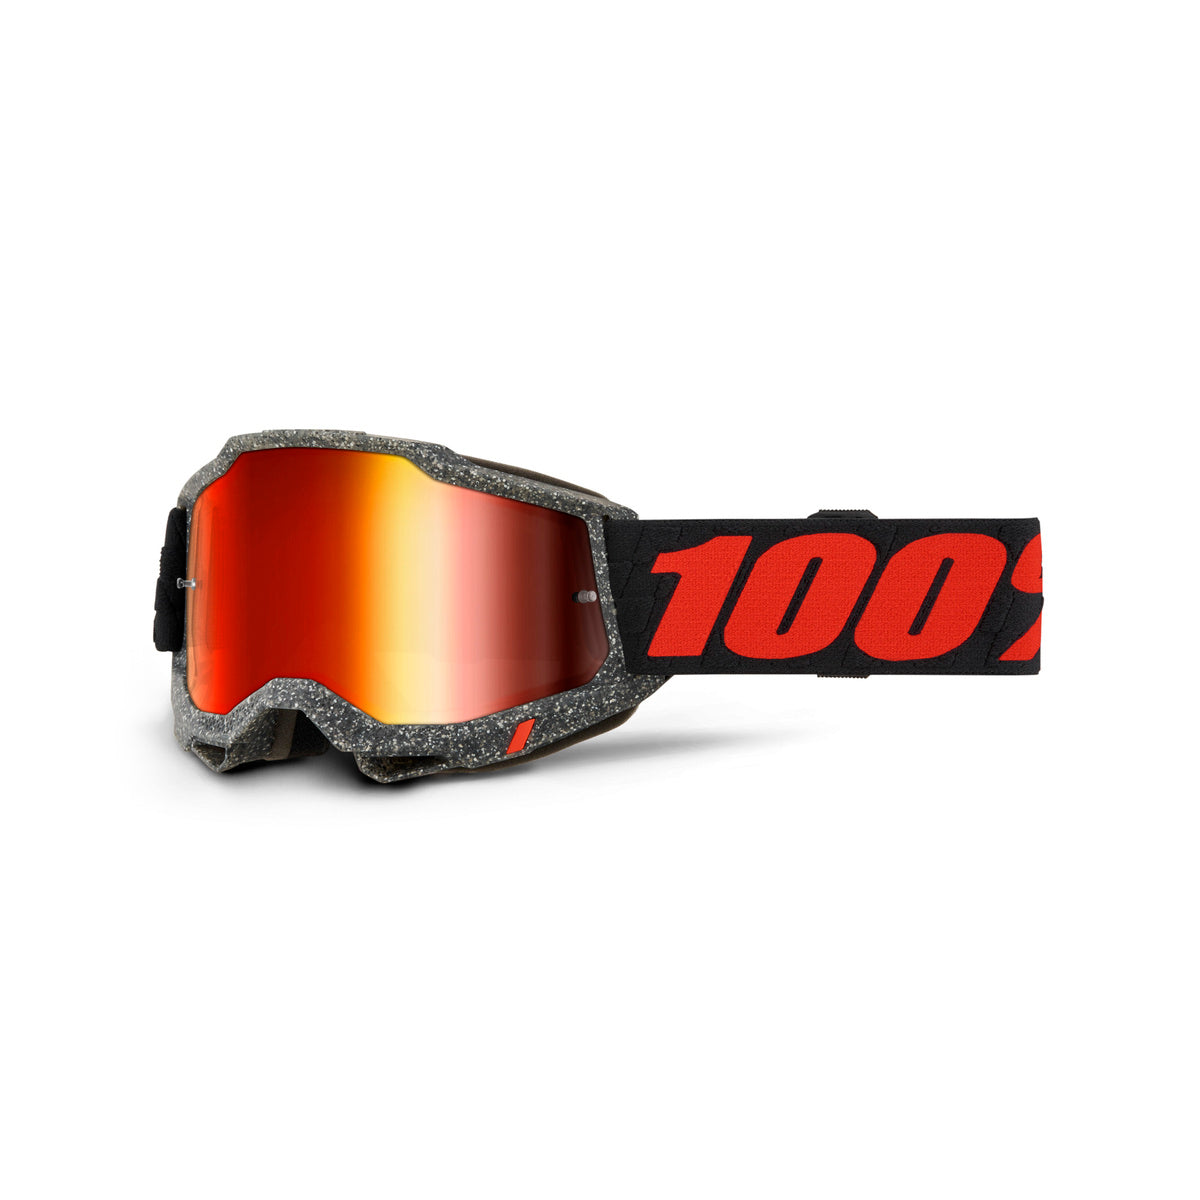 100 Percent Accuri 2 Goggles - One Size Fits Most - Huaraki - Mirror Red Lens